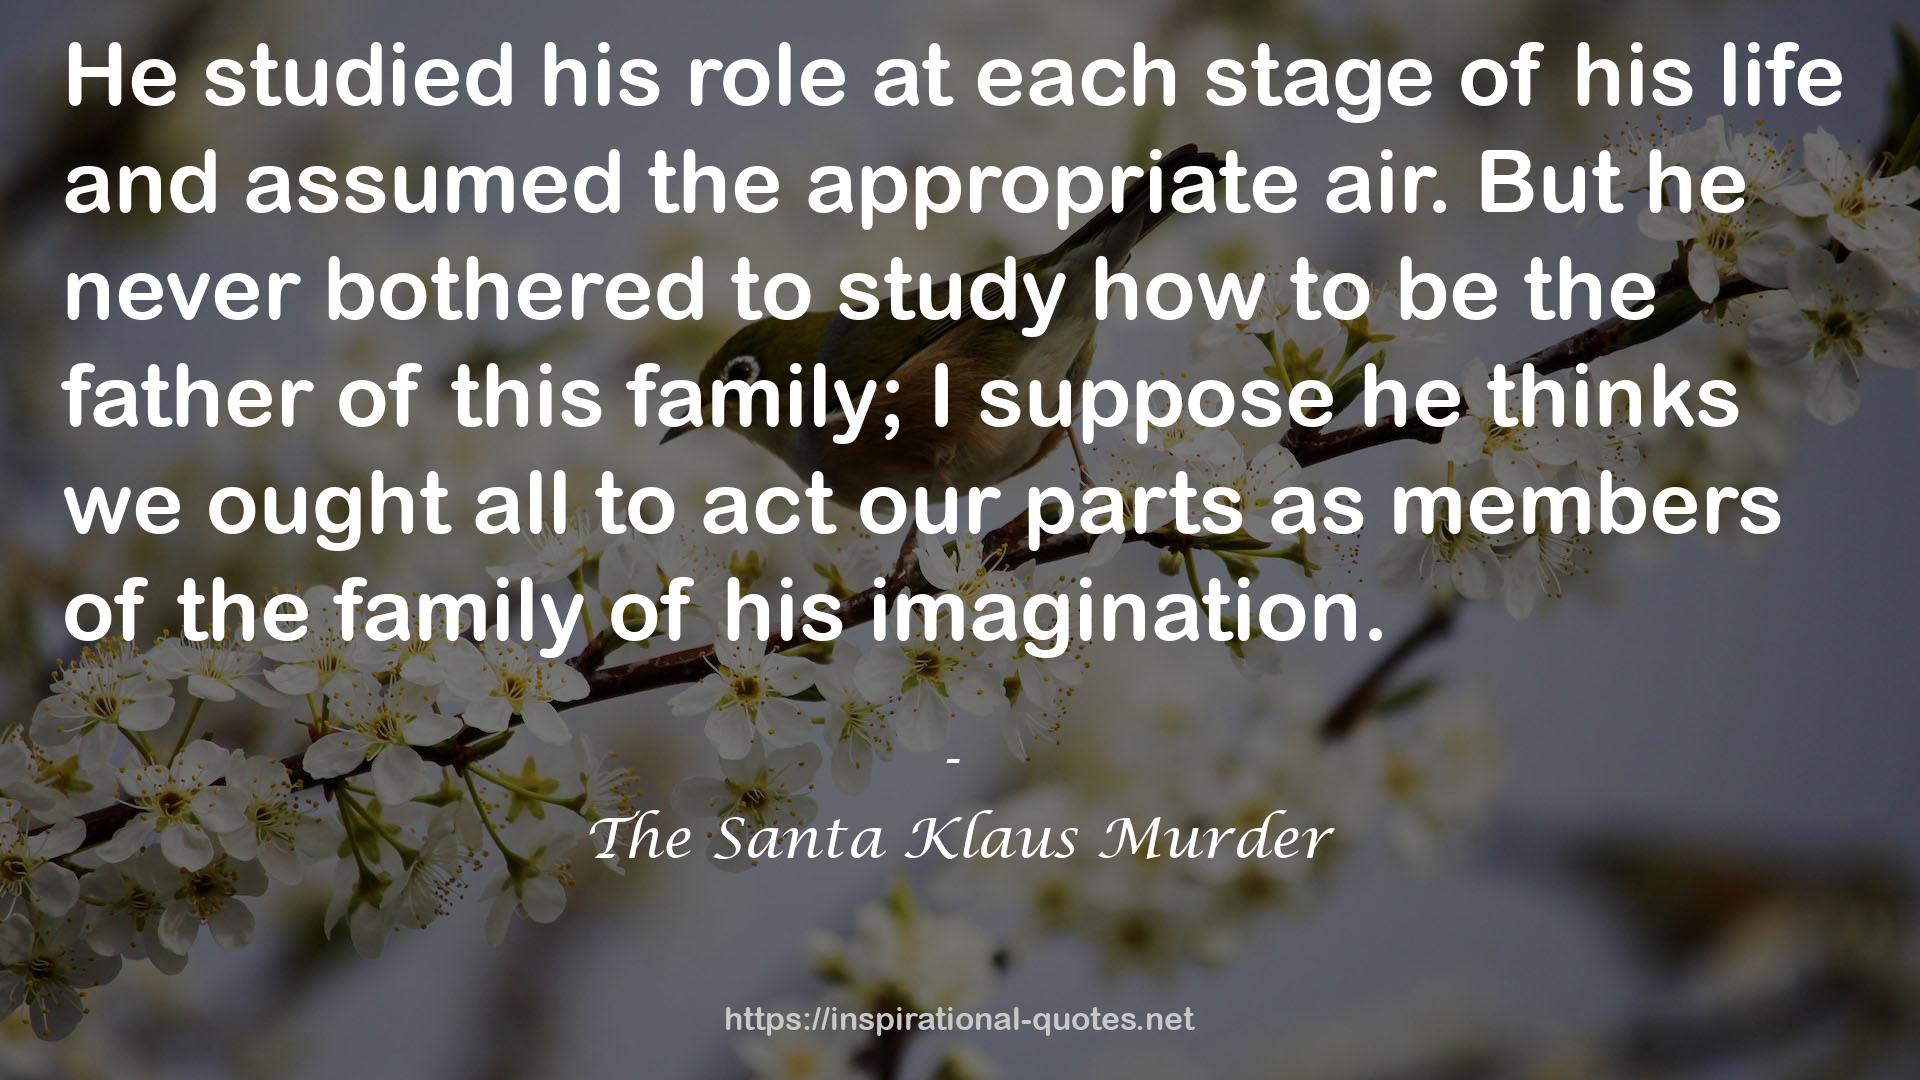 The Santa Klaus Murder QUOTES